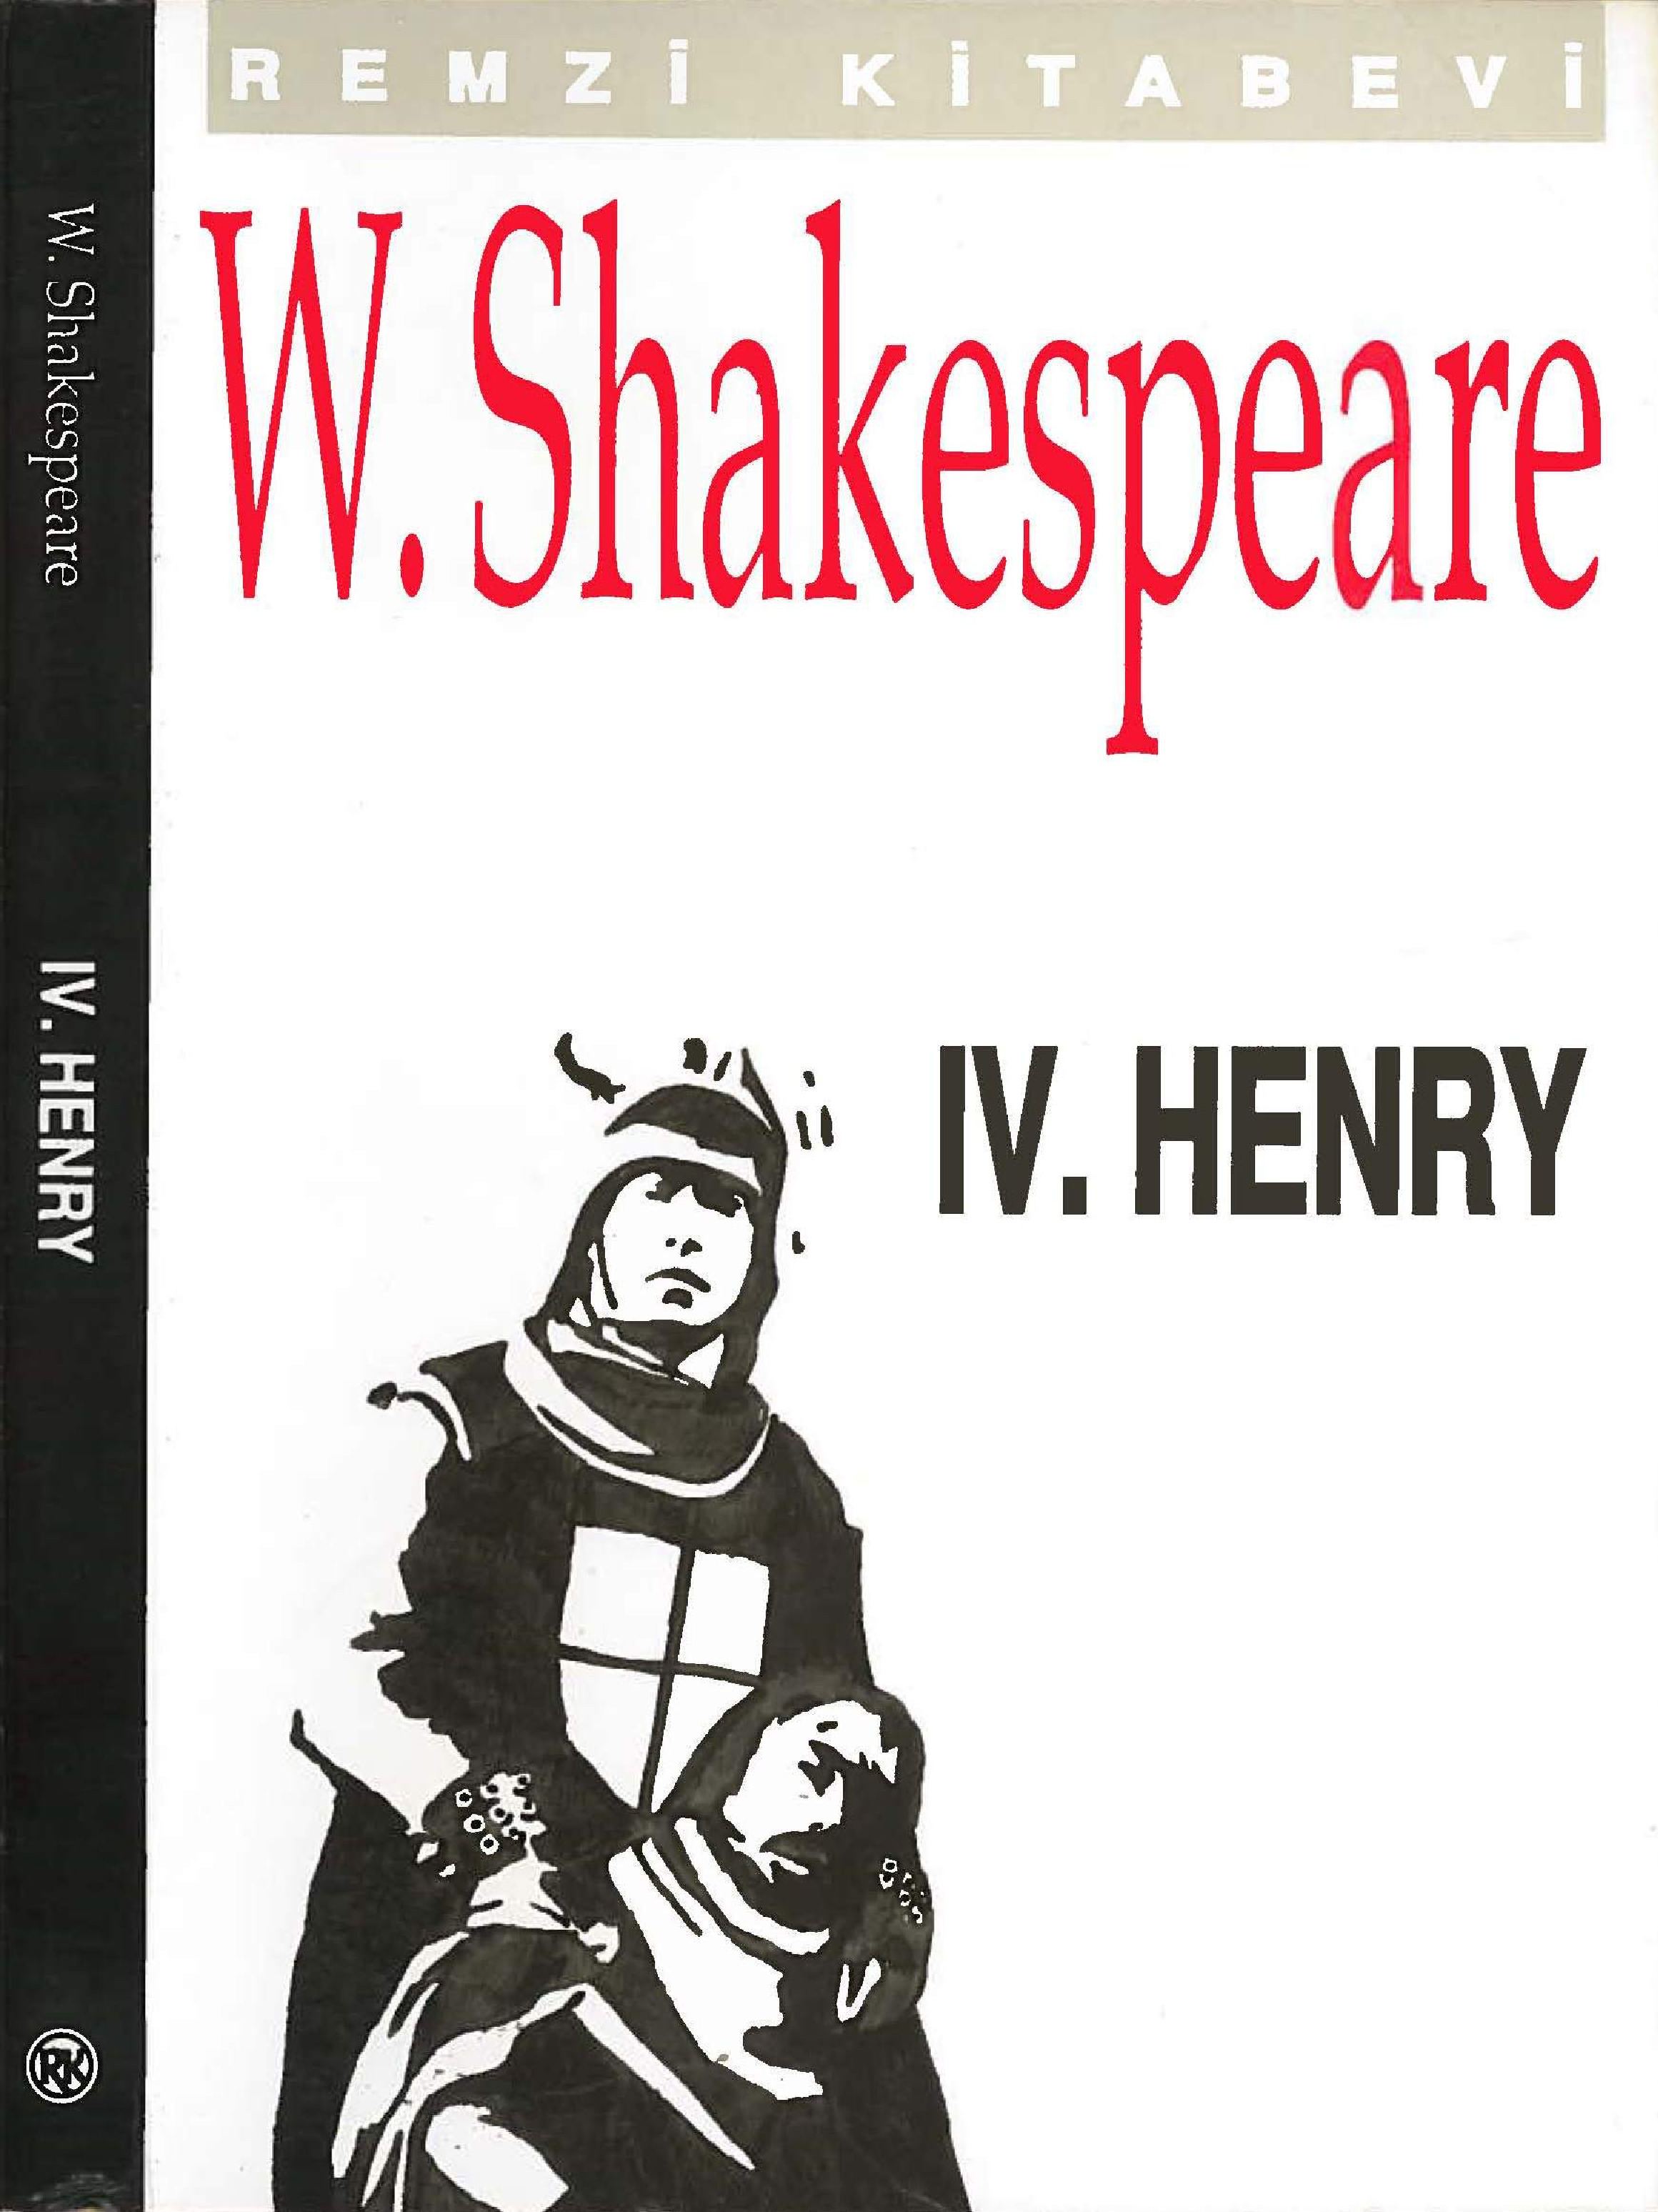 IV.Henry-William Shakespeare-1992-237s